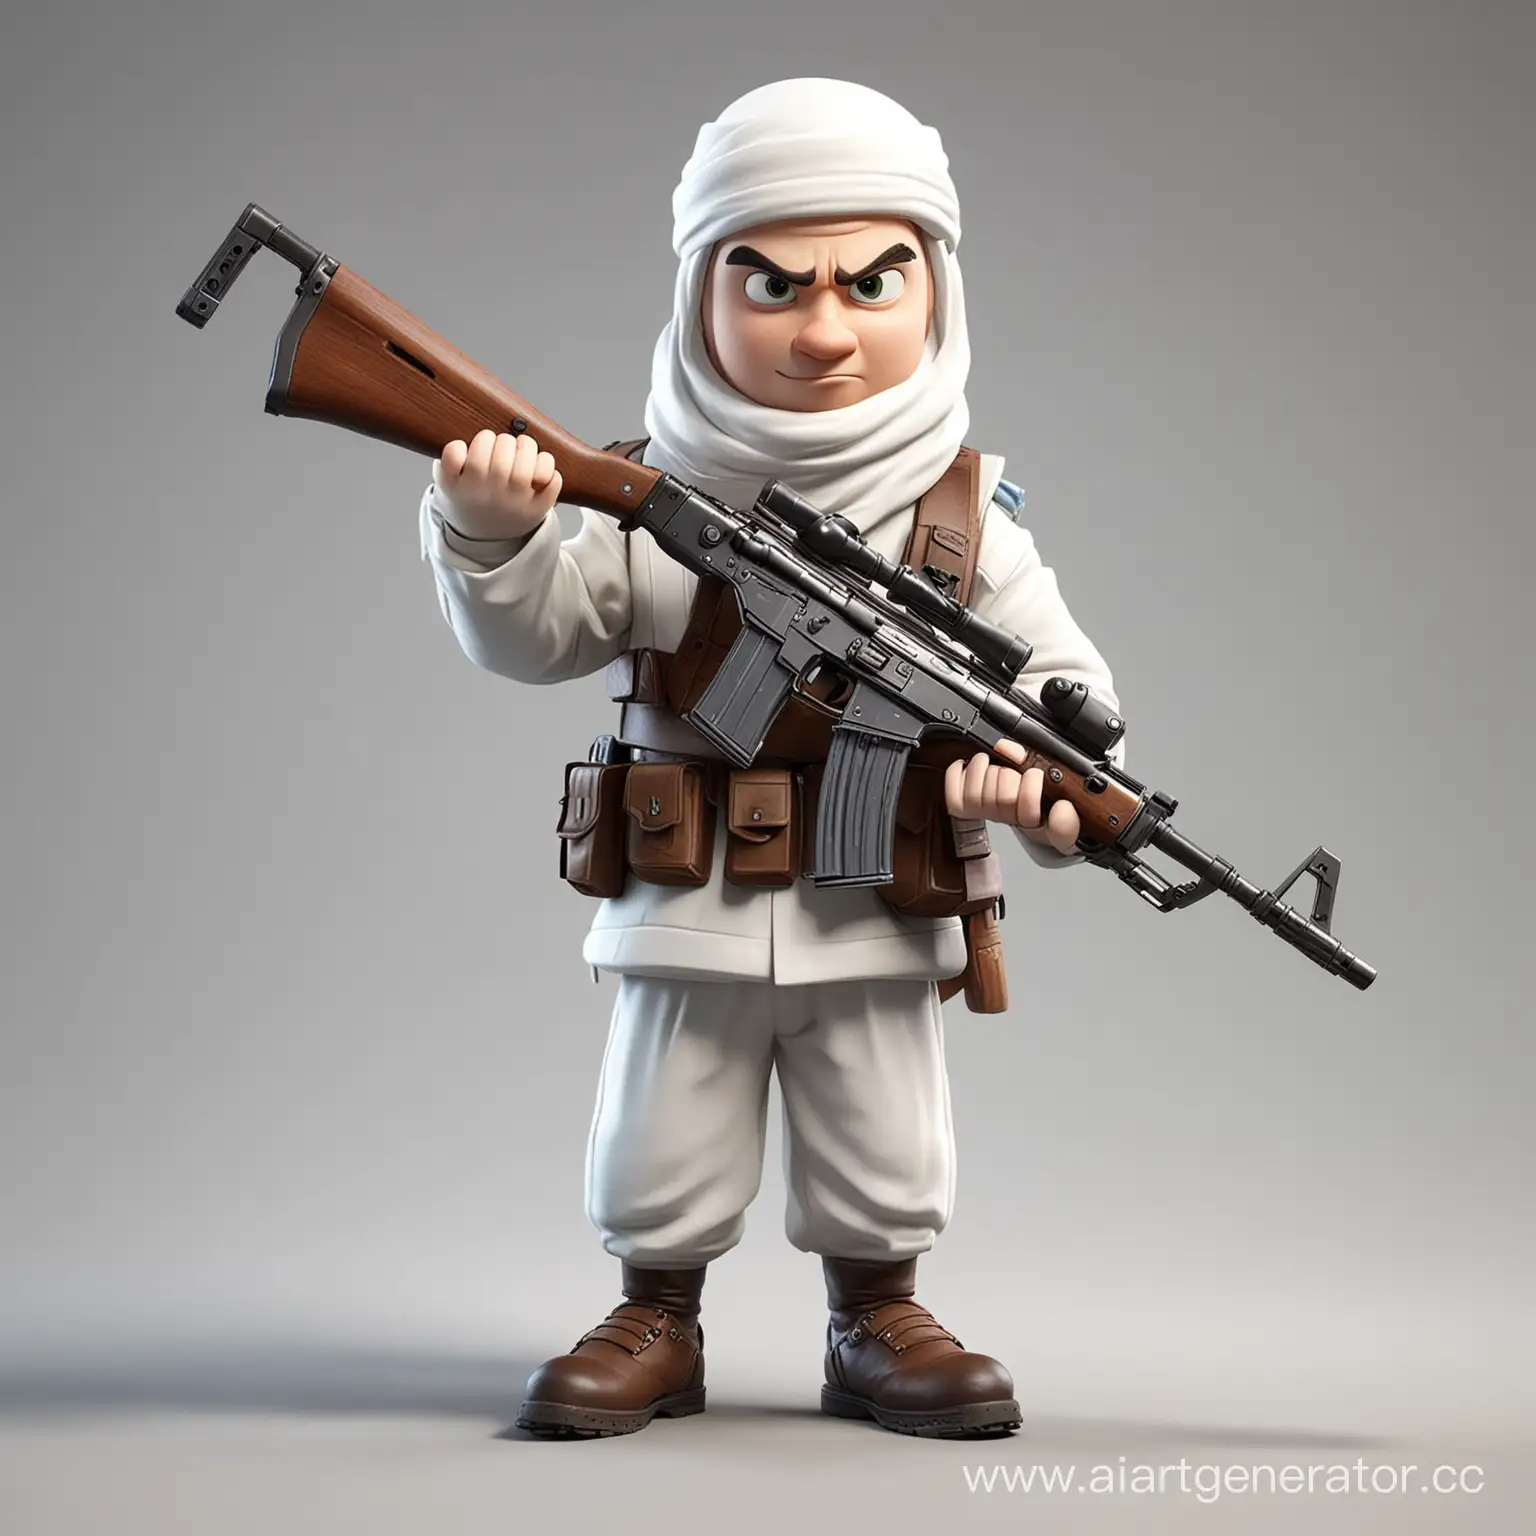 Cartoon-Character-in-Costume-with-Kalashnikov-Rifle